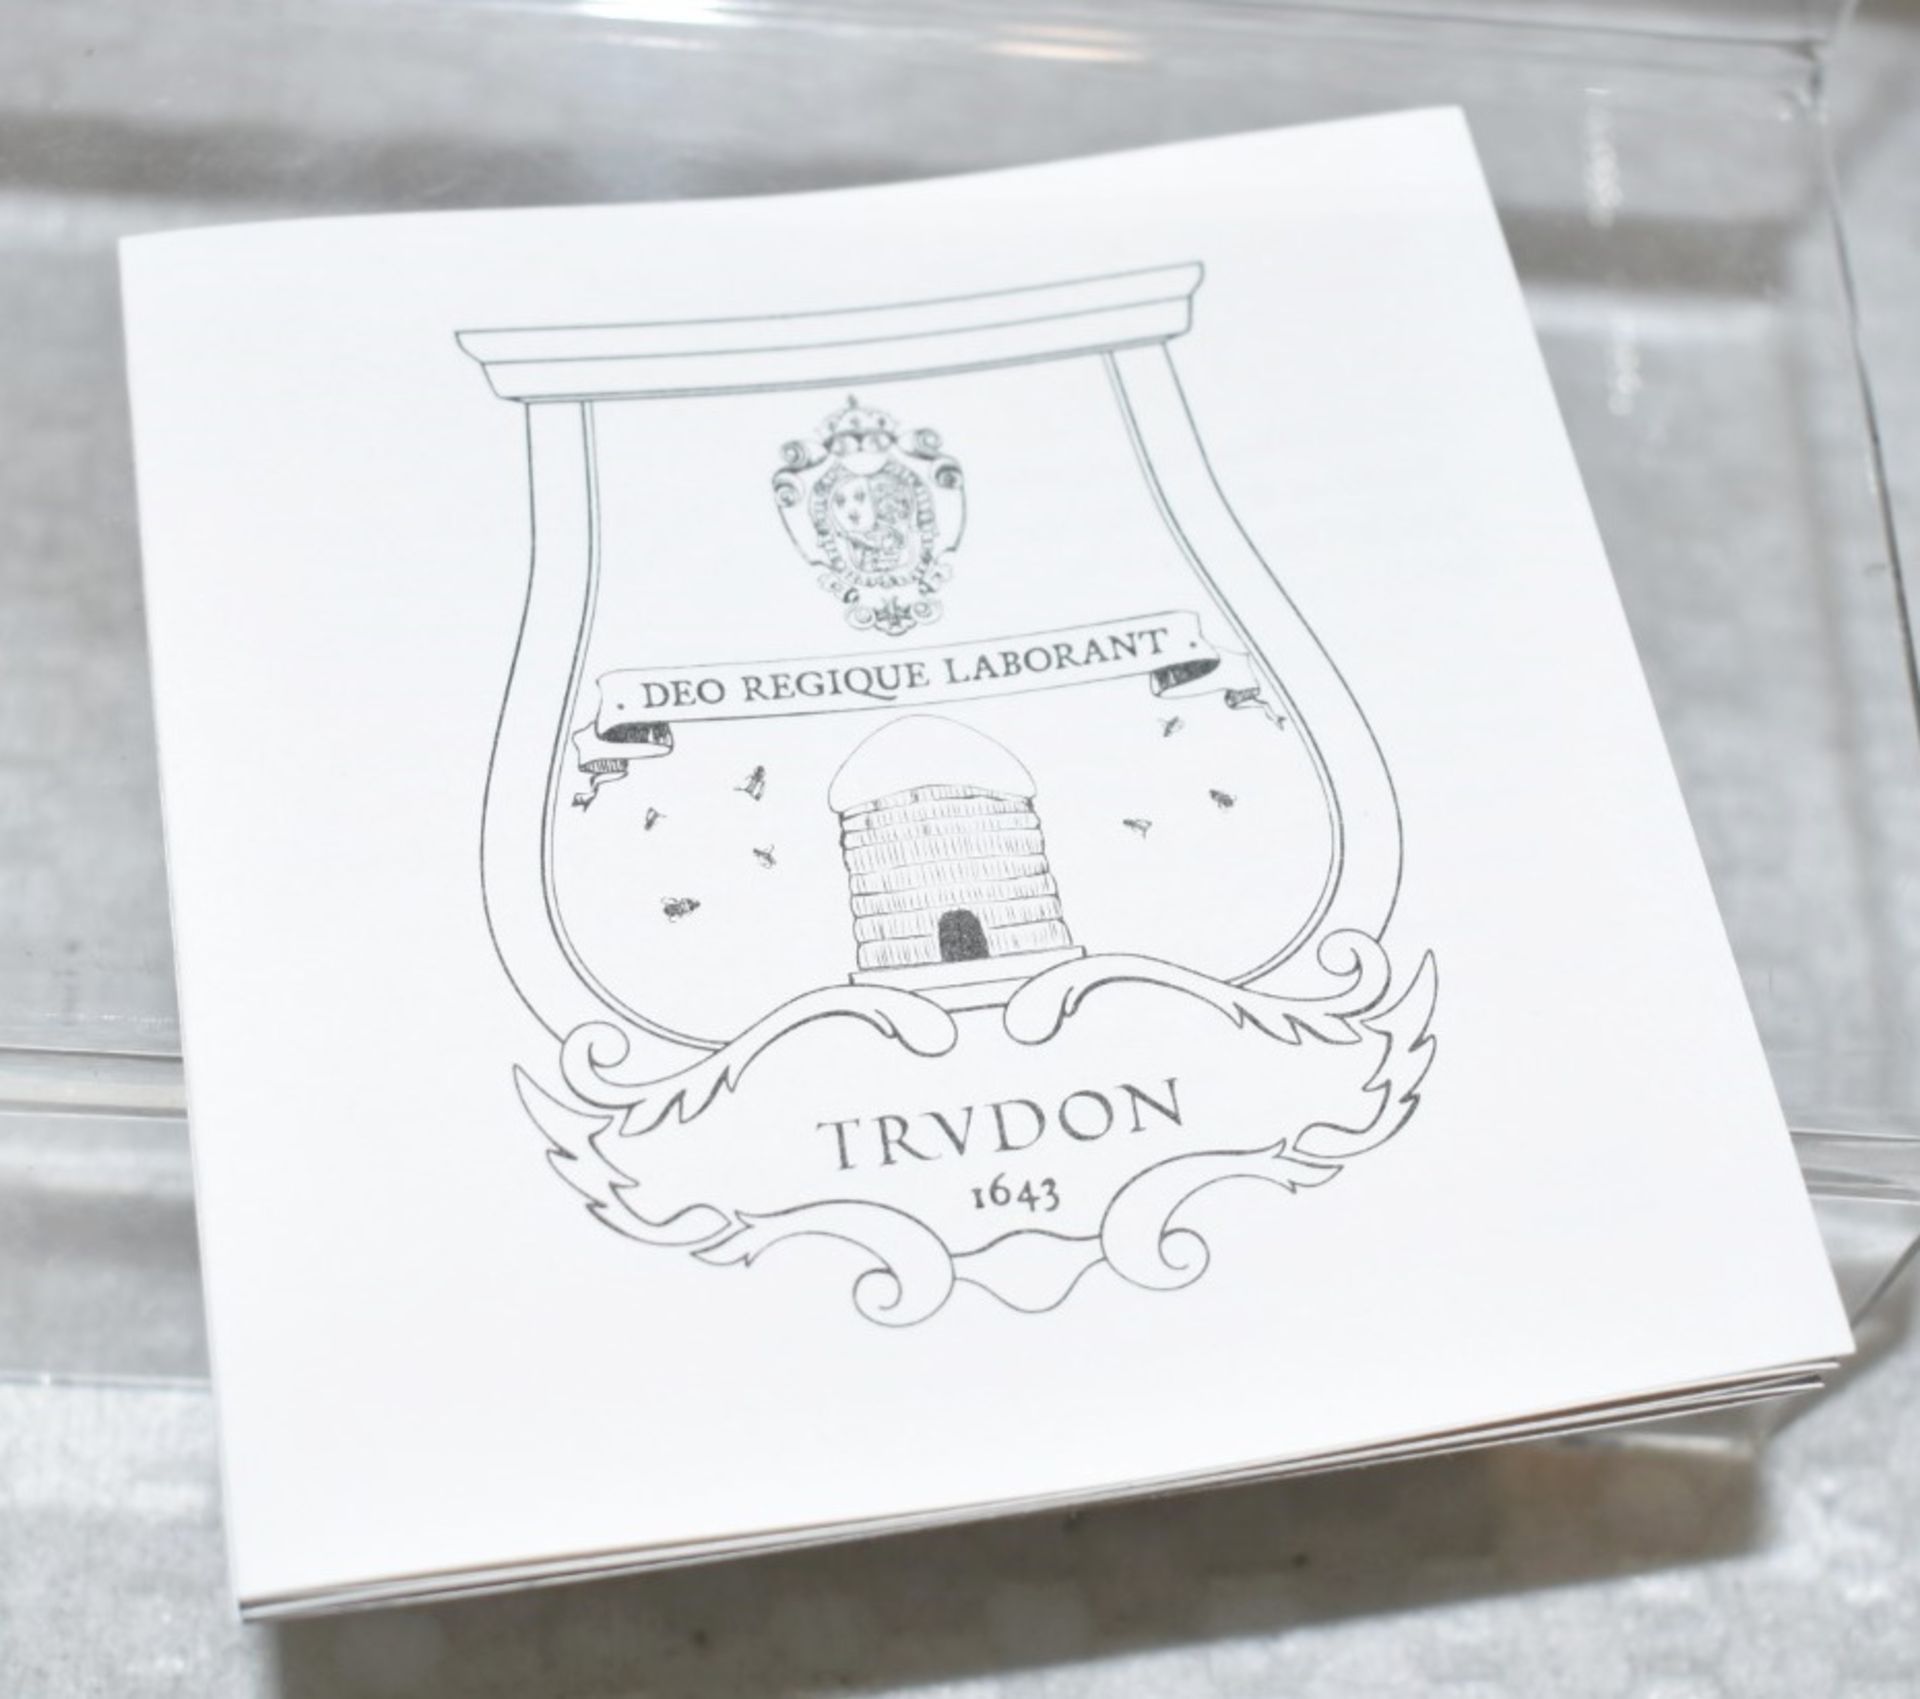 1 x TRUDON 'Joséphine' Luxury Diffuser with Reeds (350ml) - Original Price £165.00 - Unused Boxed - Image 7 of 7